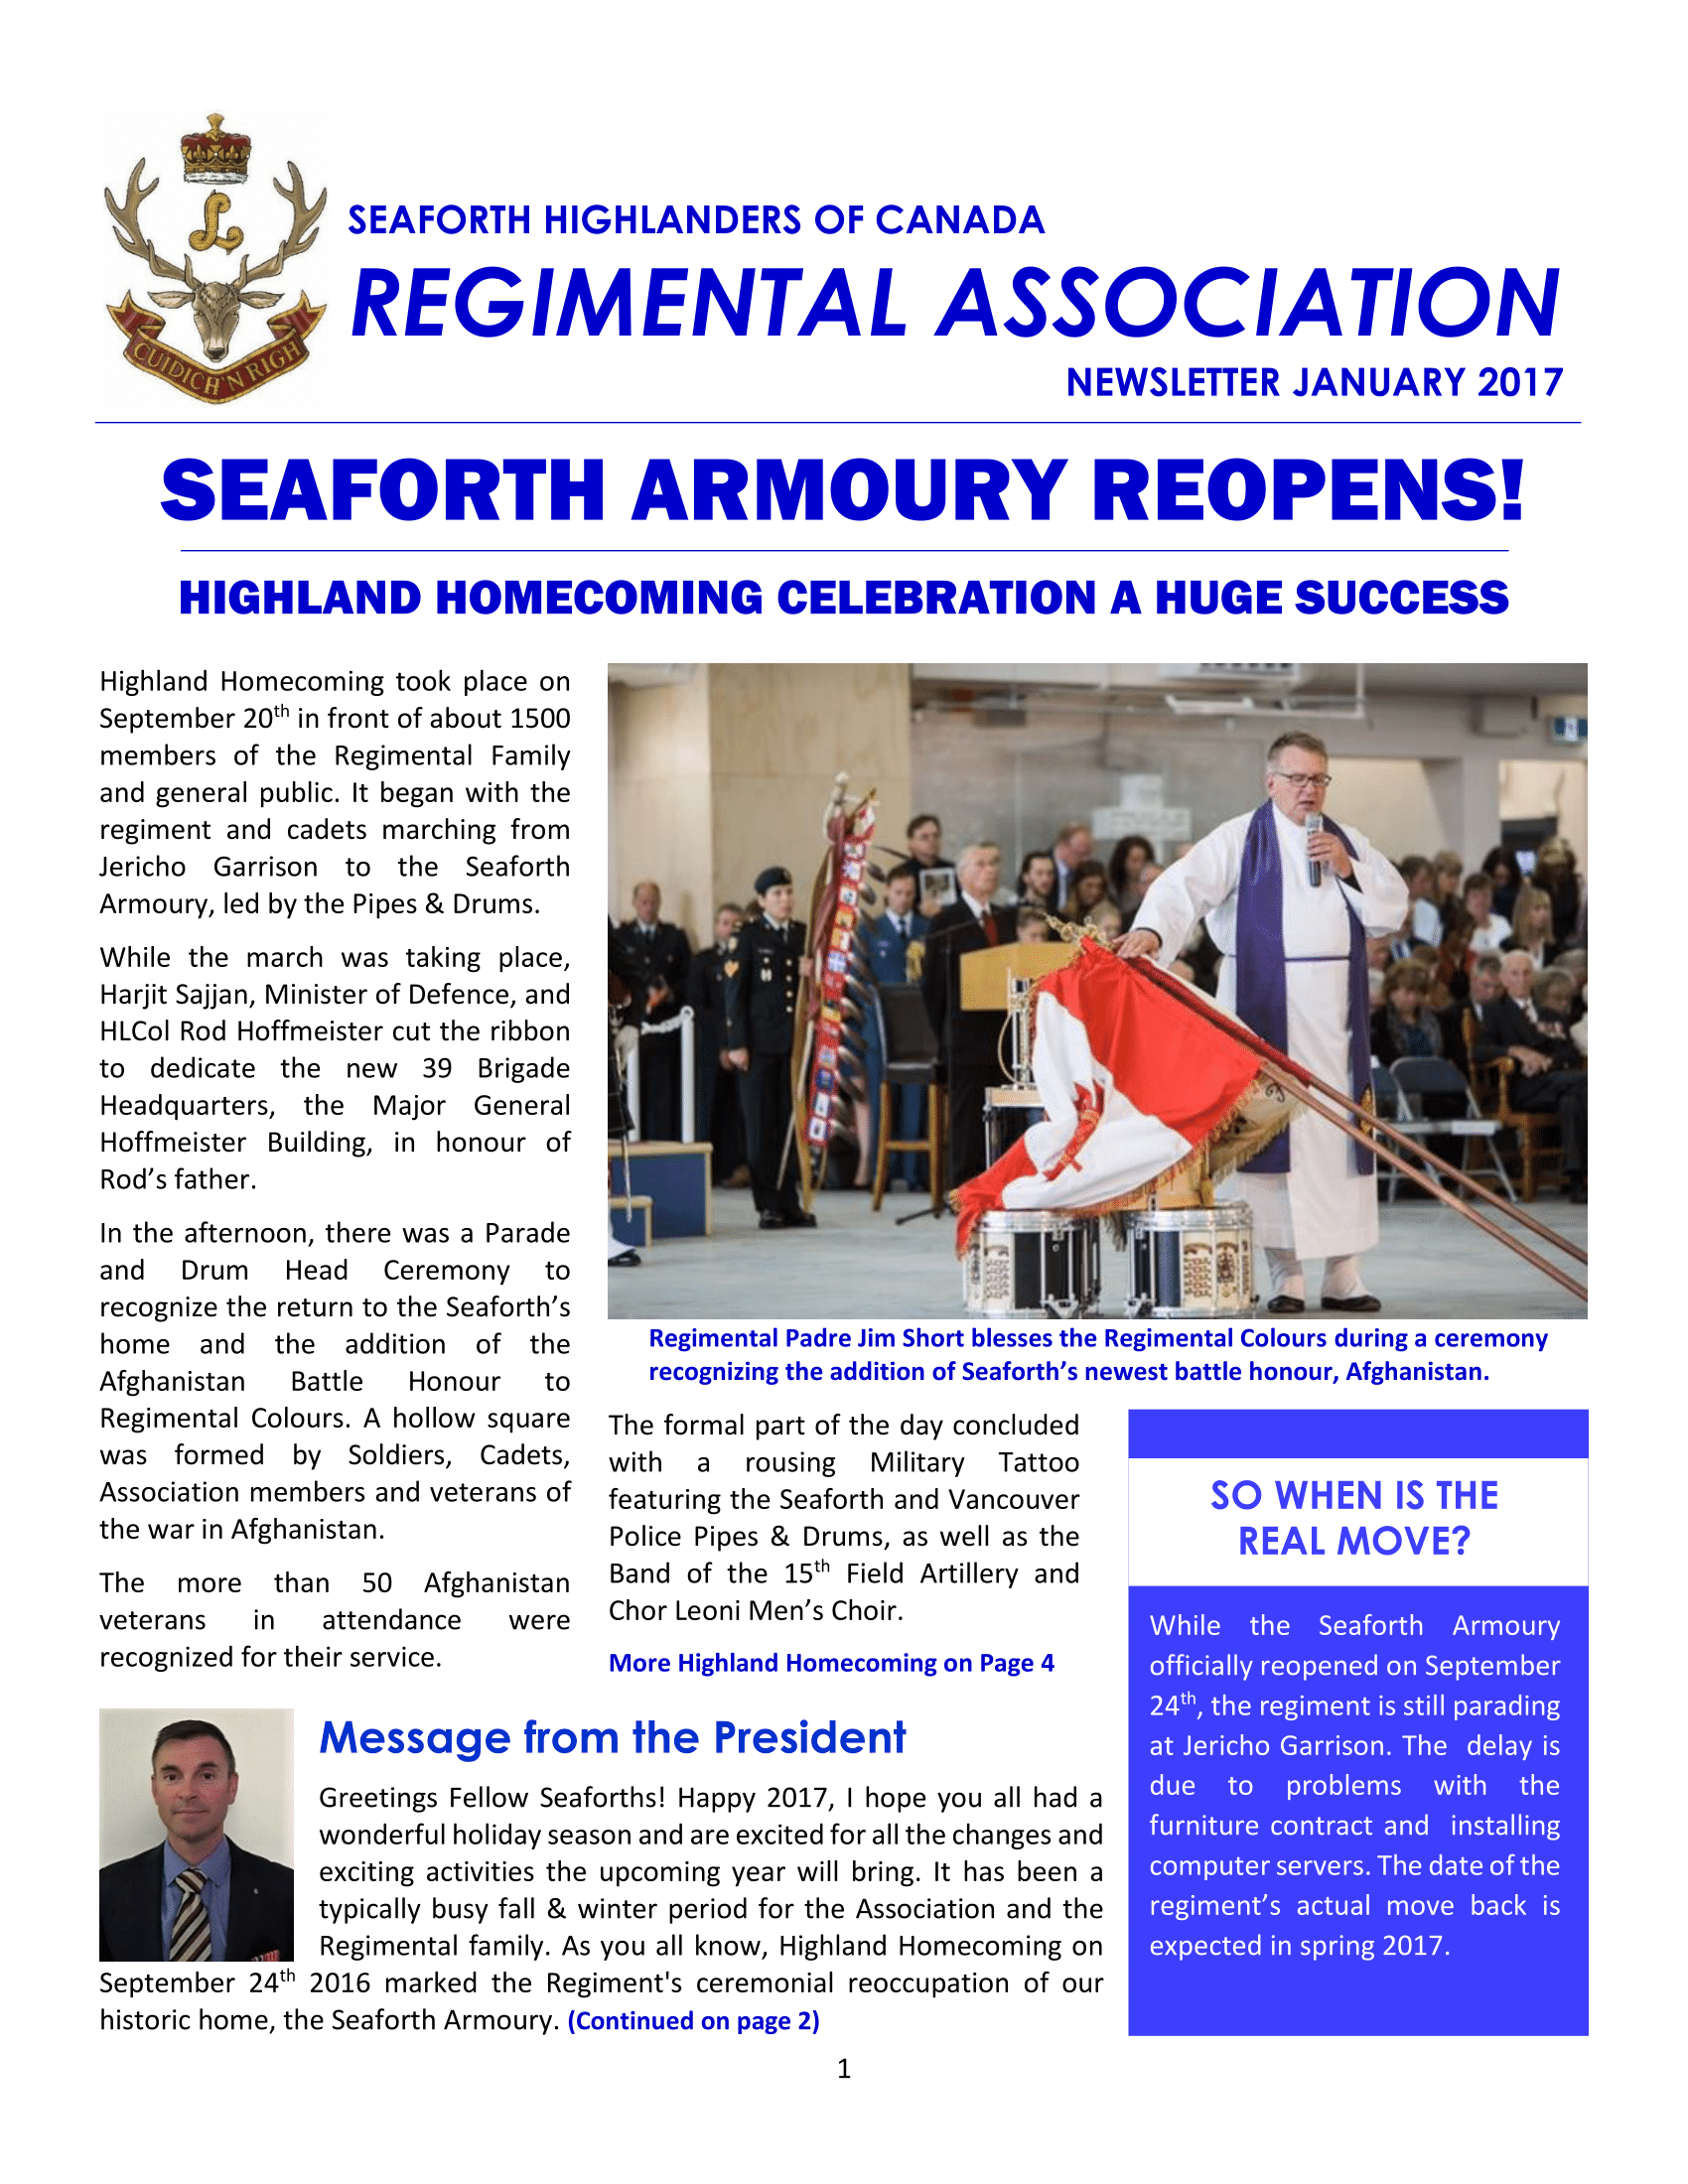 Association Newsletter January 2017-1.png